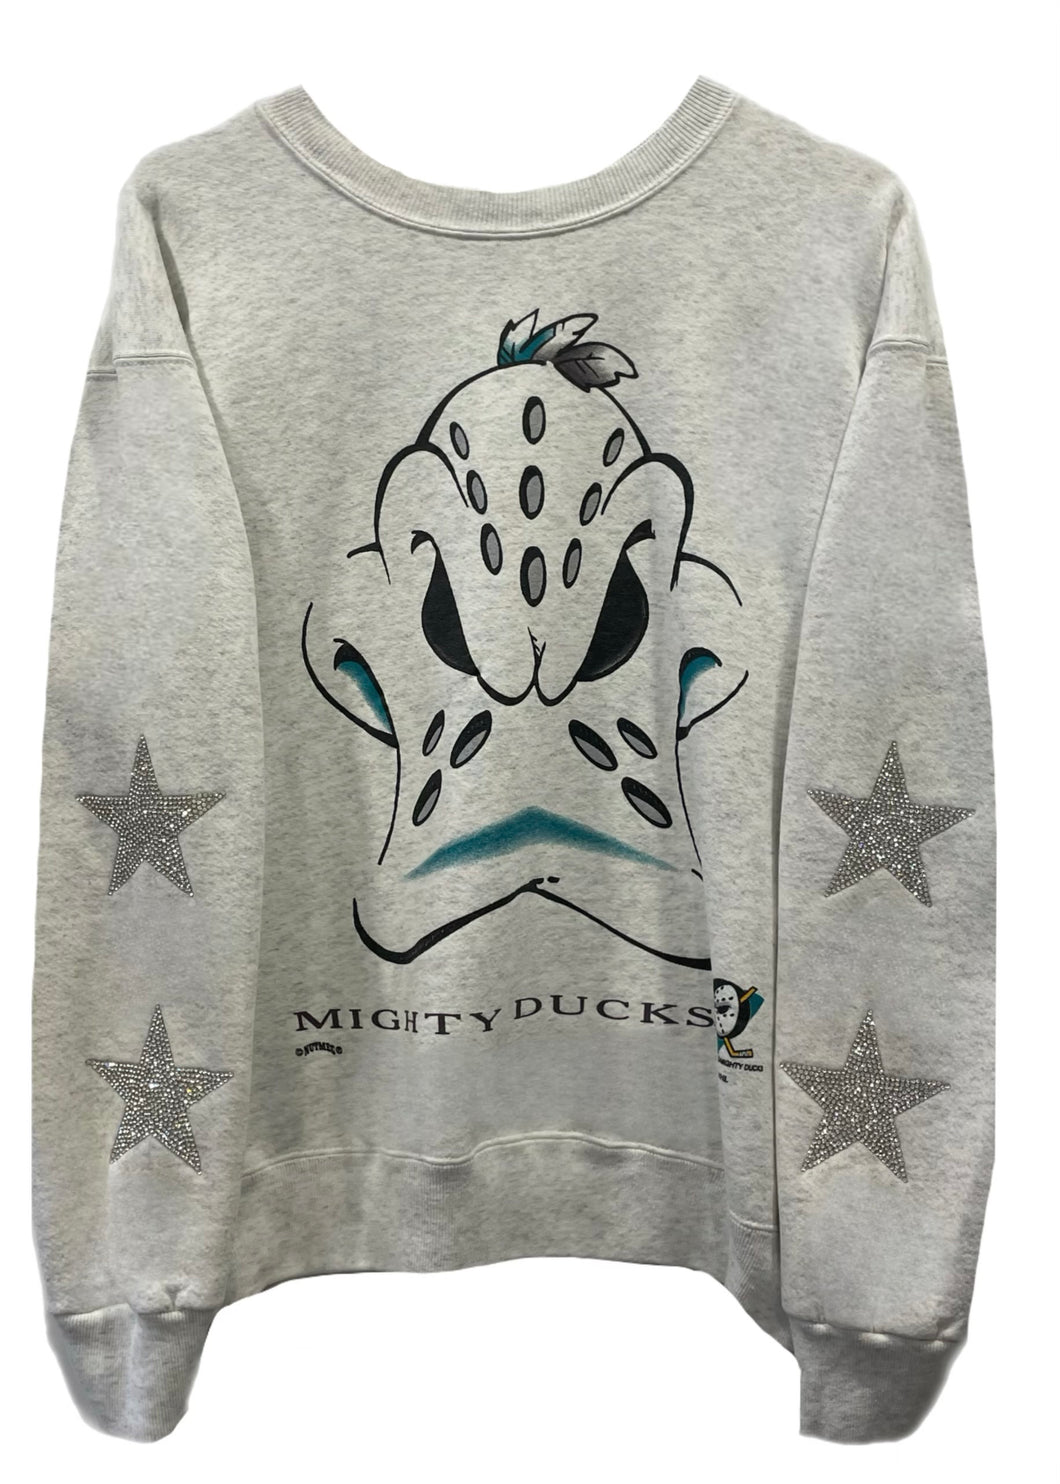 Anaheim Ducks, Hockey One of a KIND Vintage “Mighty Ducks” Super Rare Find Sweatshirt with Crystal Star Design